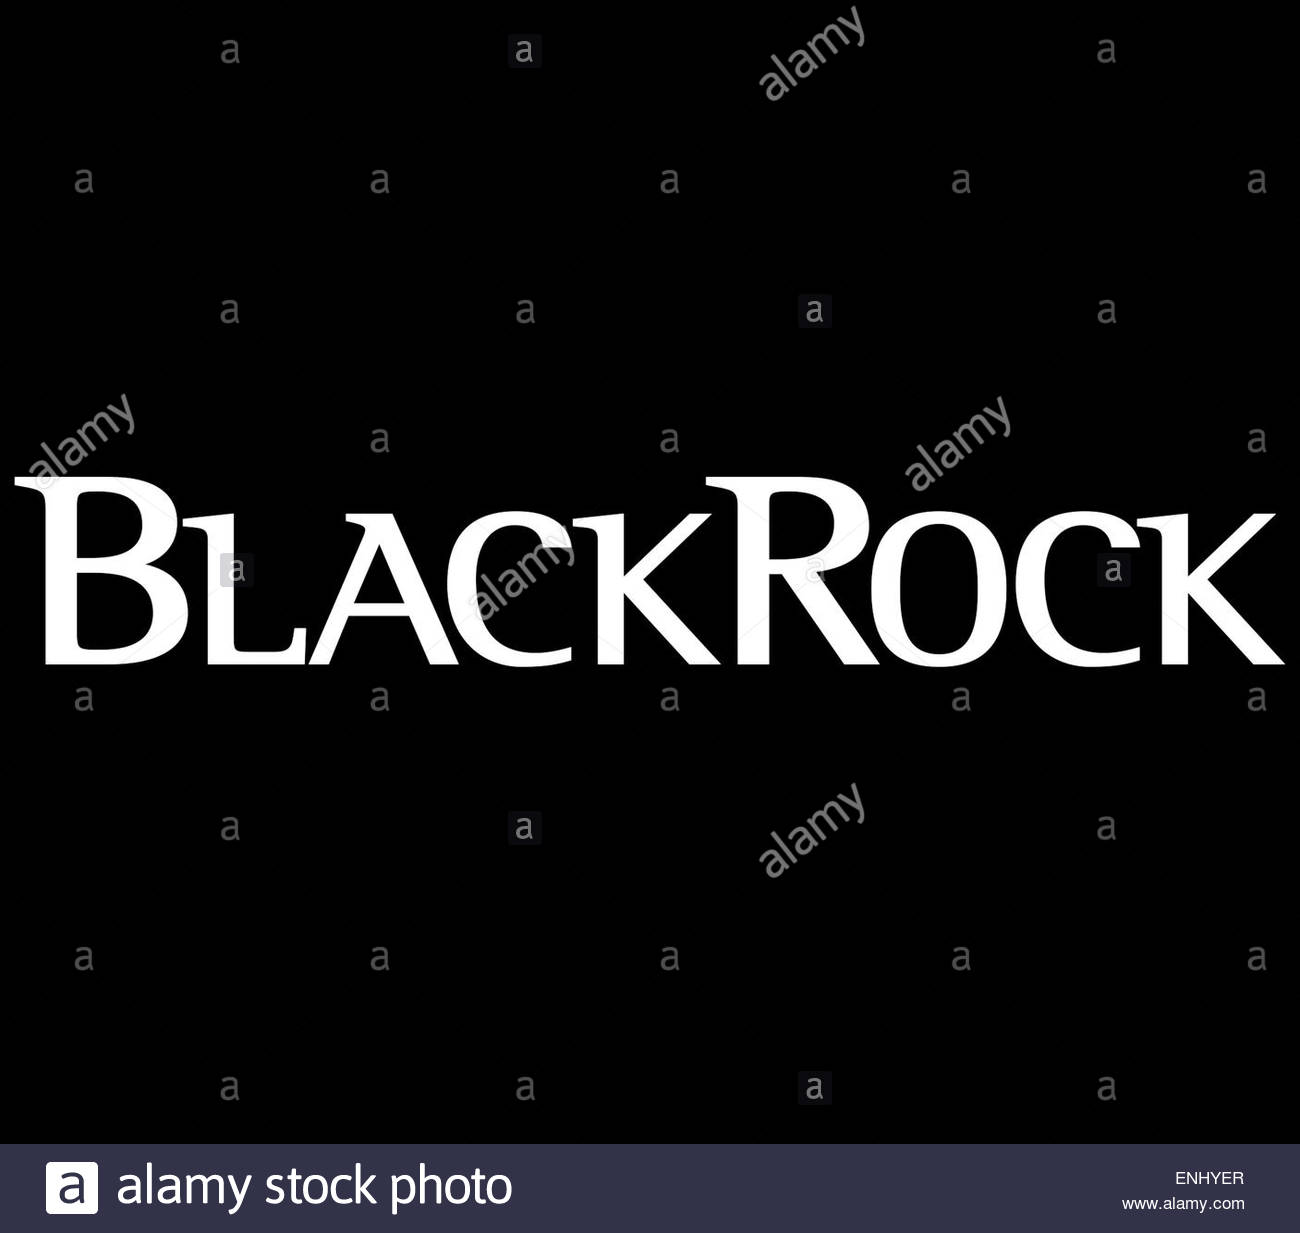 Blackrock Logo Stock Photos & Blackrock Logo Stock Images - Alamy